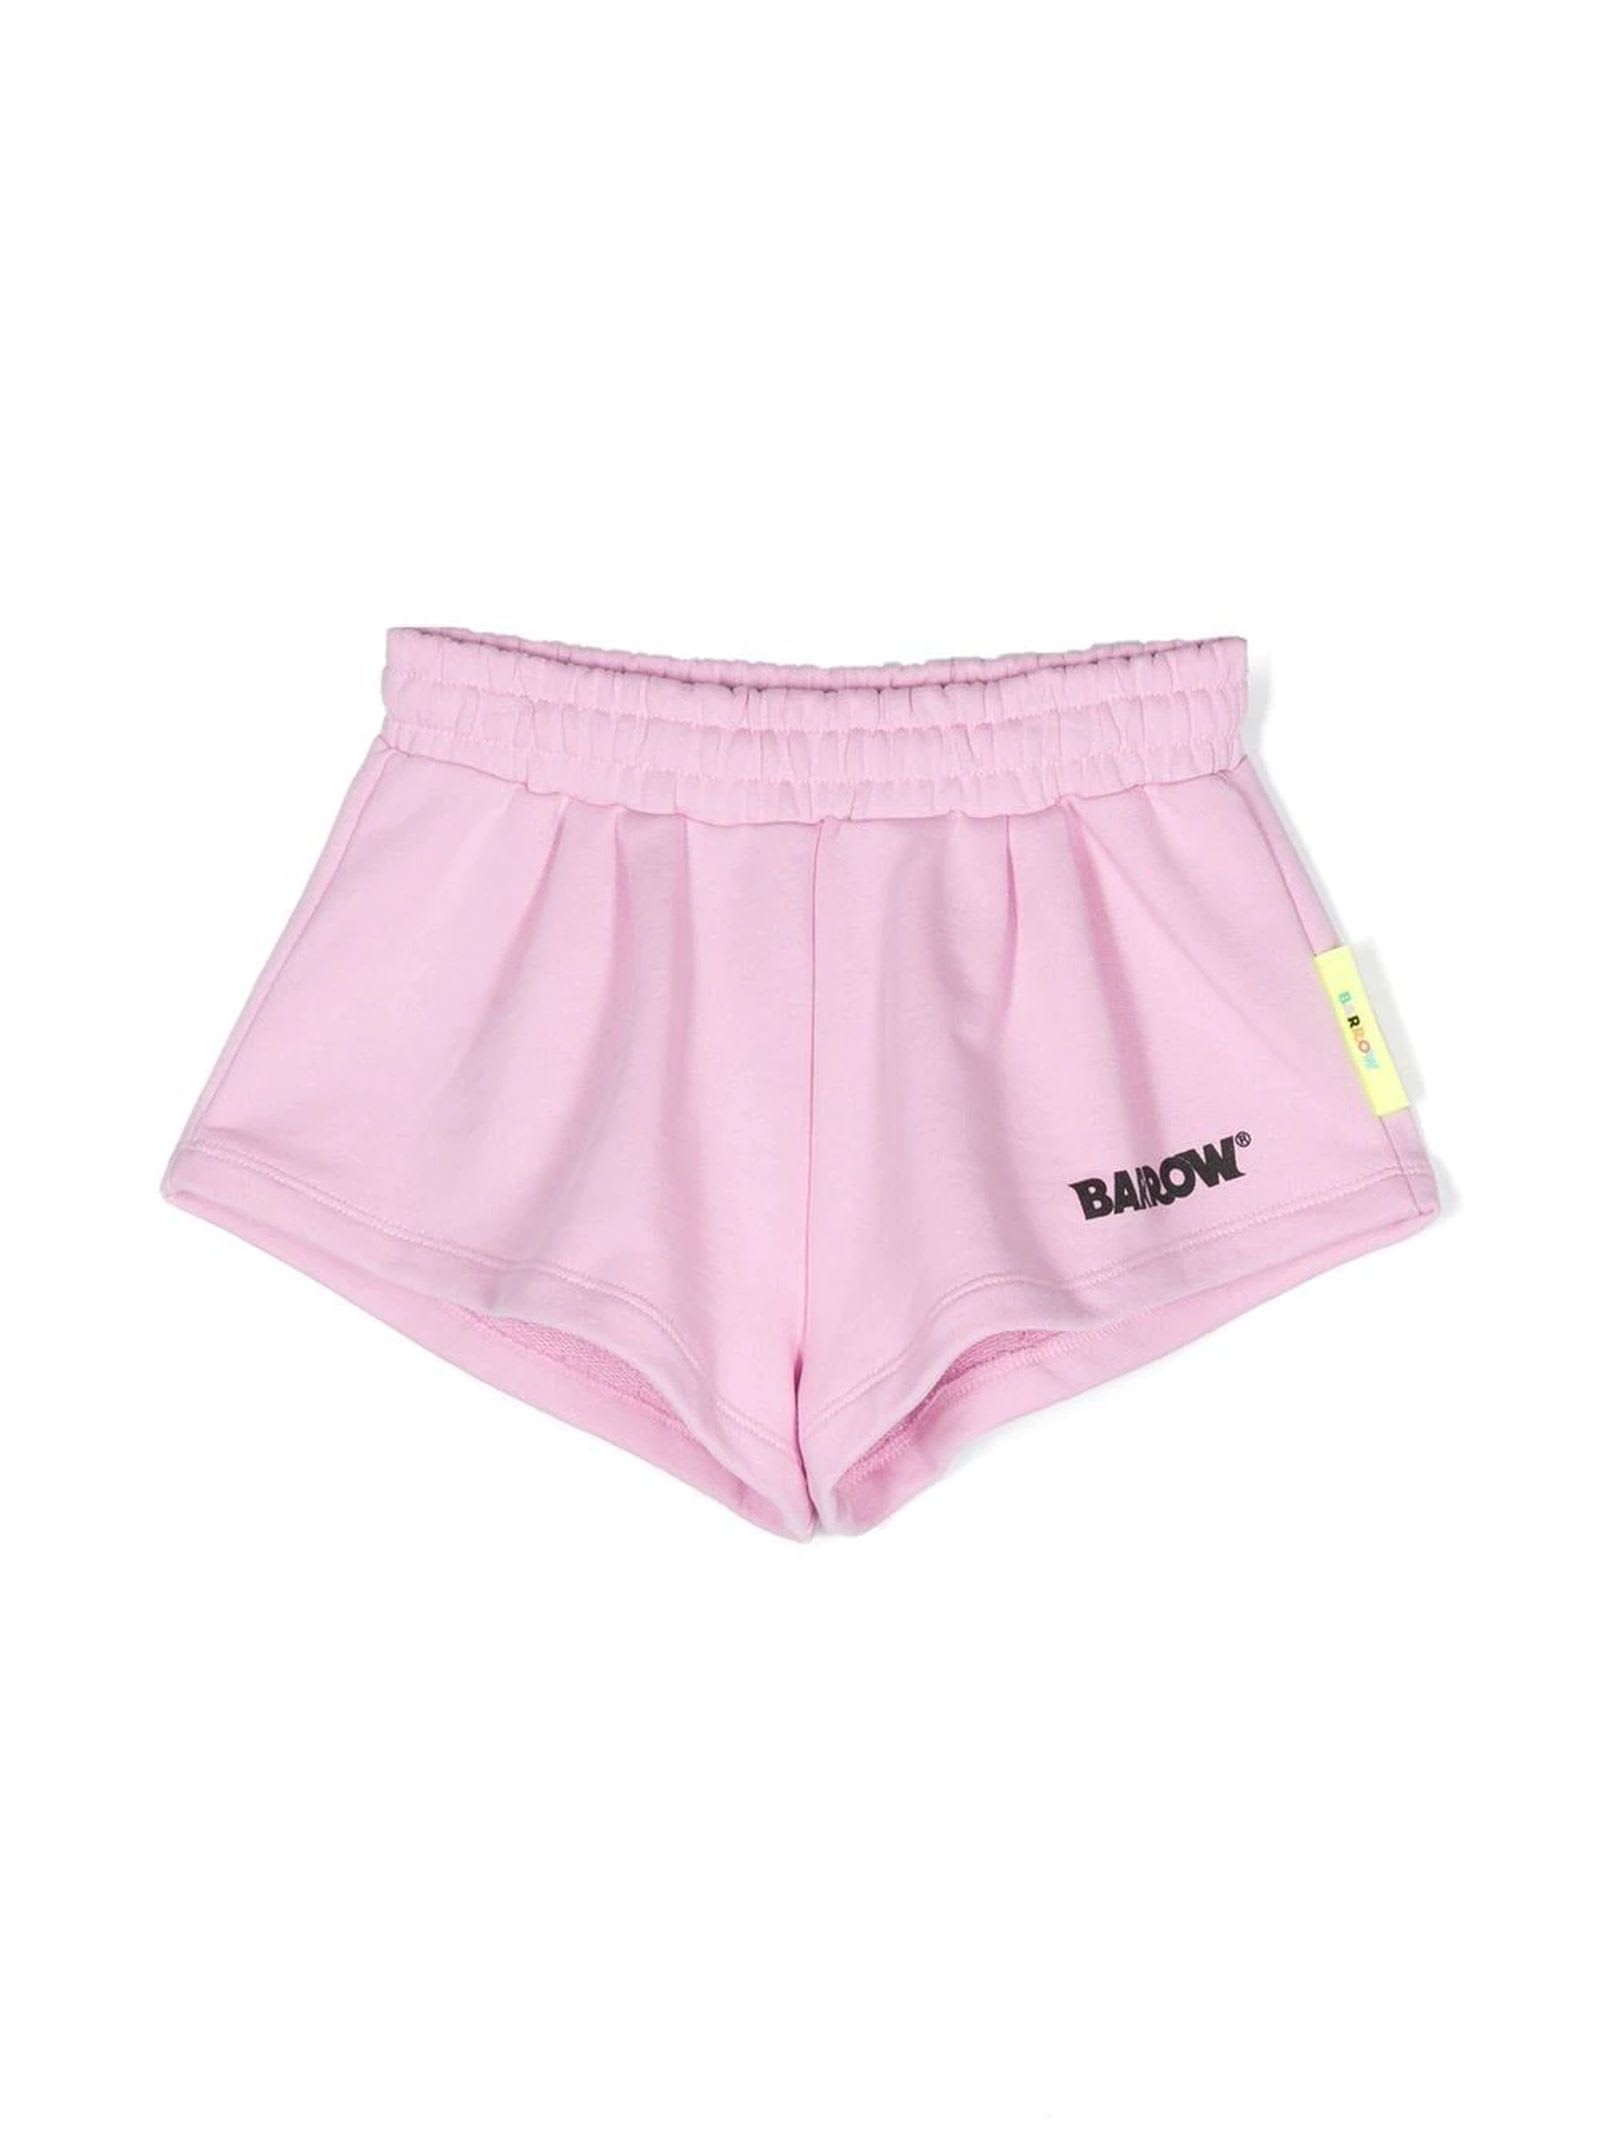 Barrow Pink Cotton Shorts